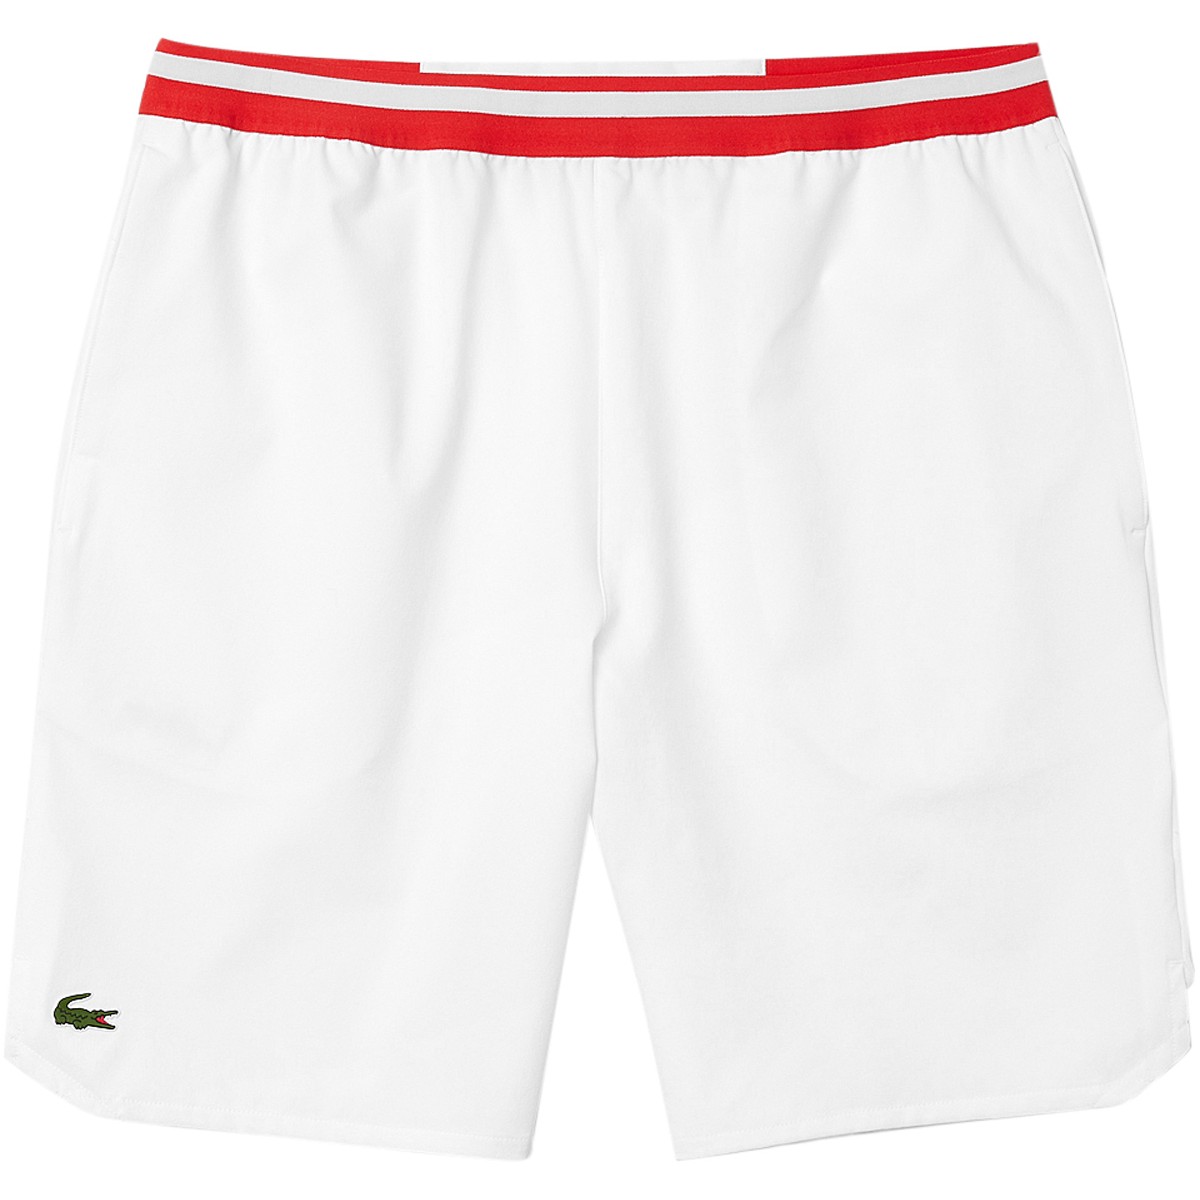 Шорты лакост. Red shorts Lacoste Tennis. Теннисные шорты Lacoste. Шорты теннисные лакосте.